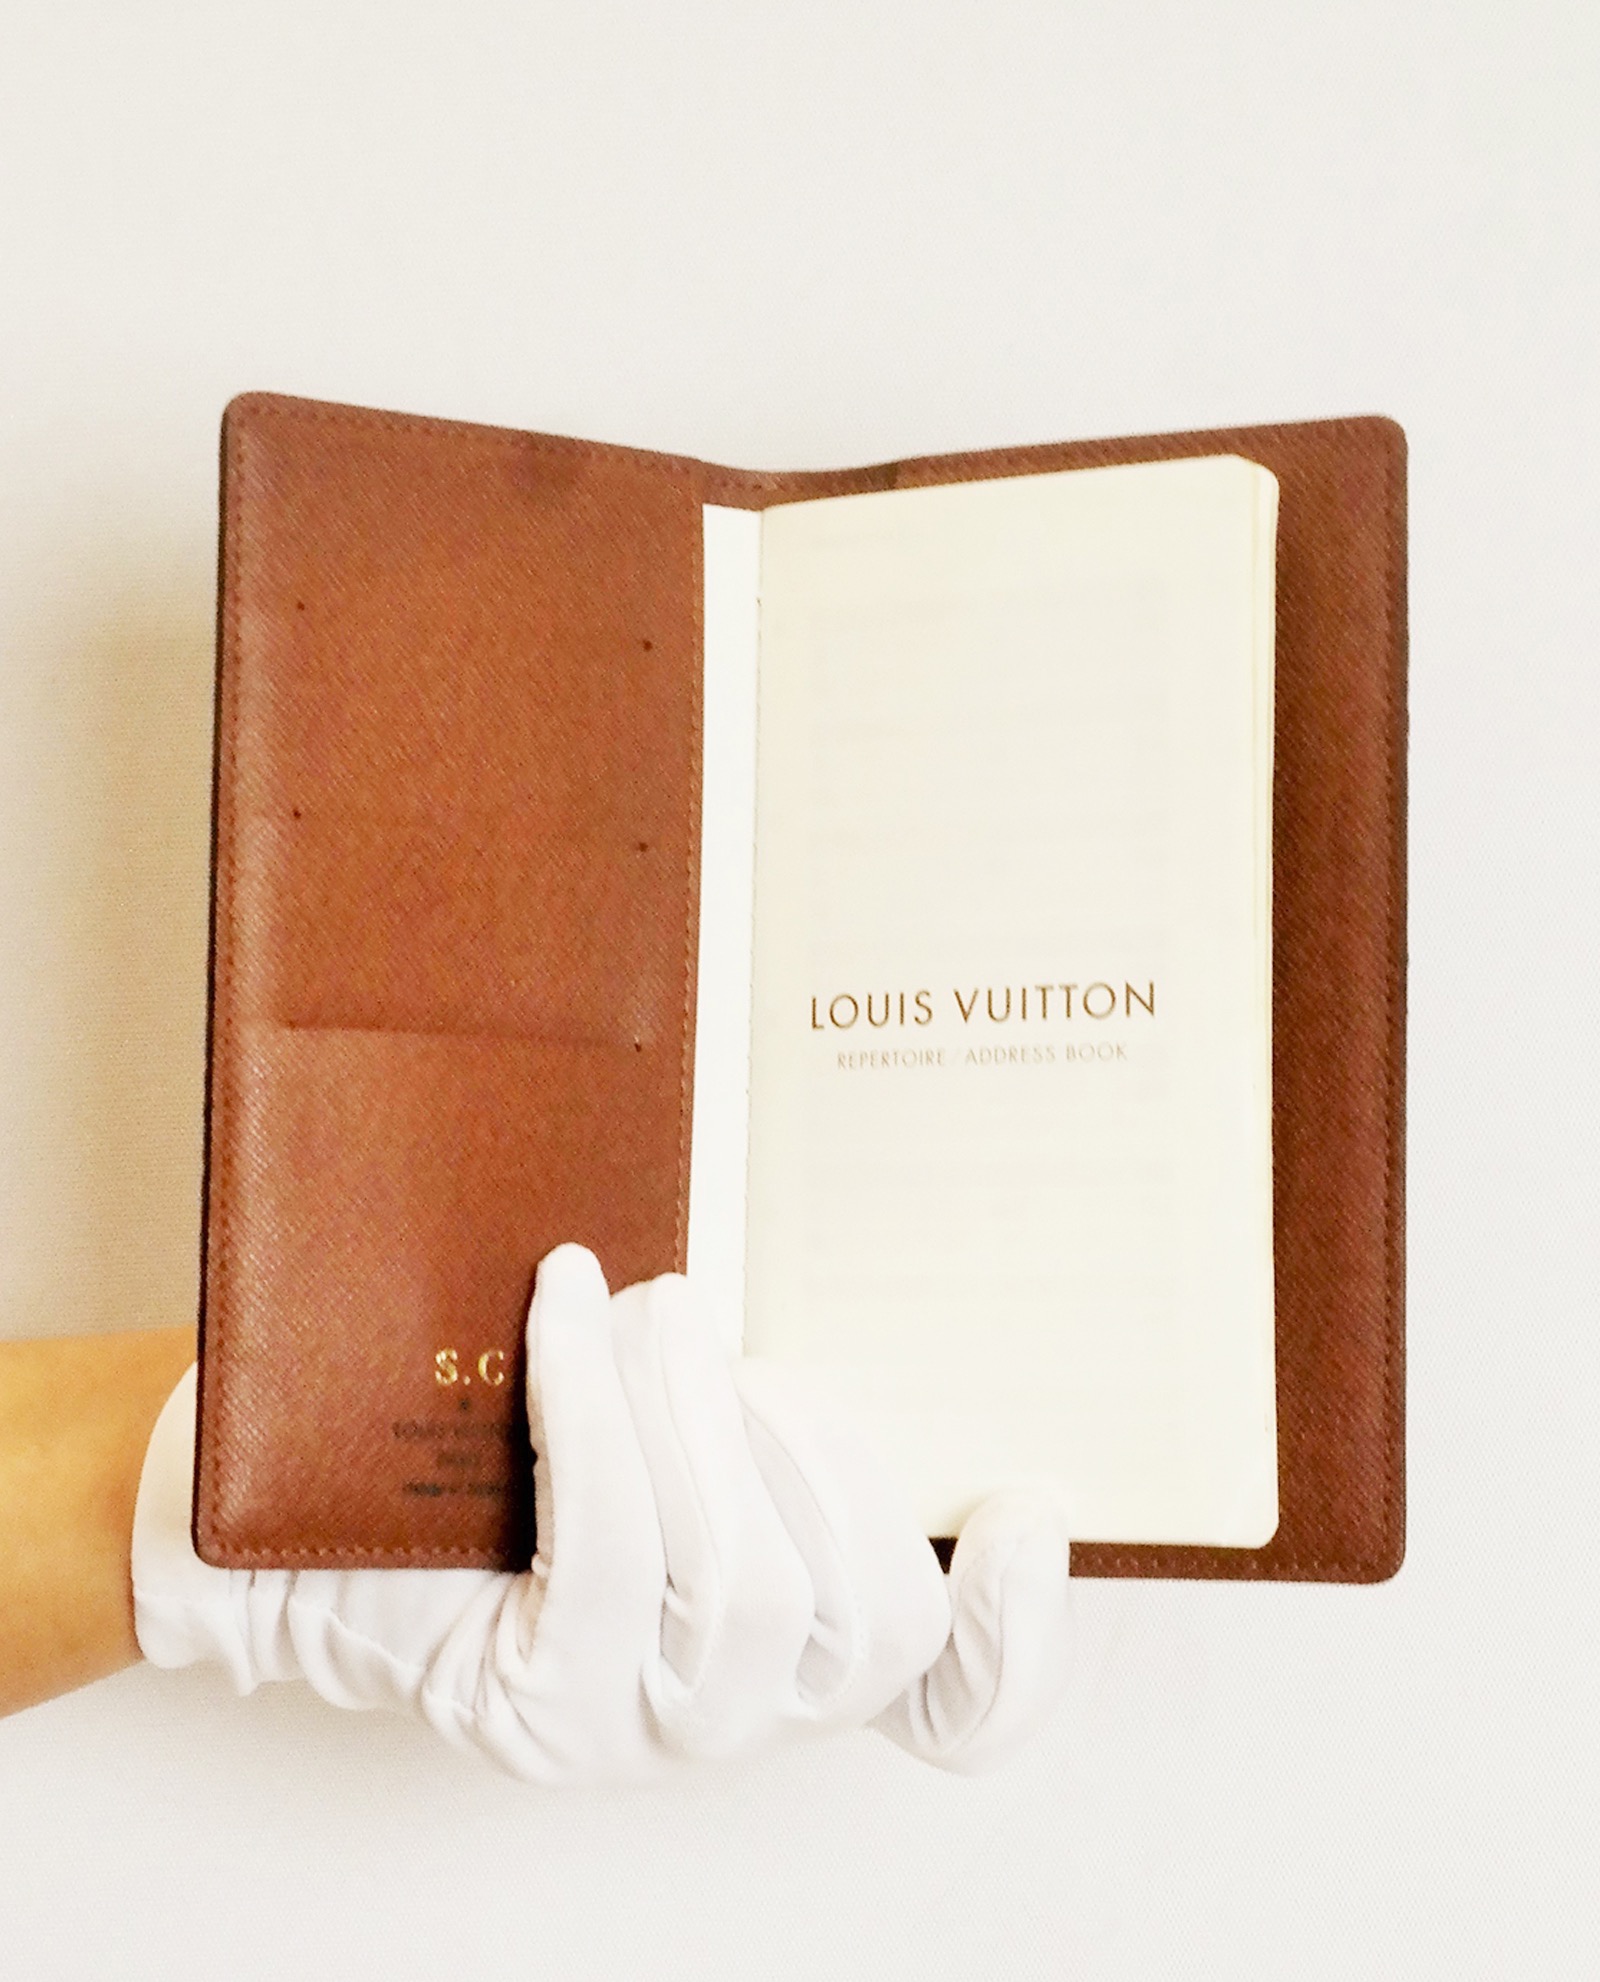 Authentic LOUIS VUITTON Address Book/Repertire 1 book Brown Paper #W607057